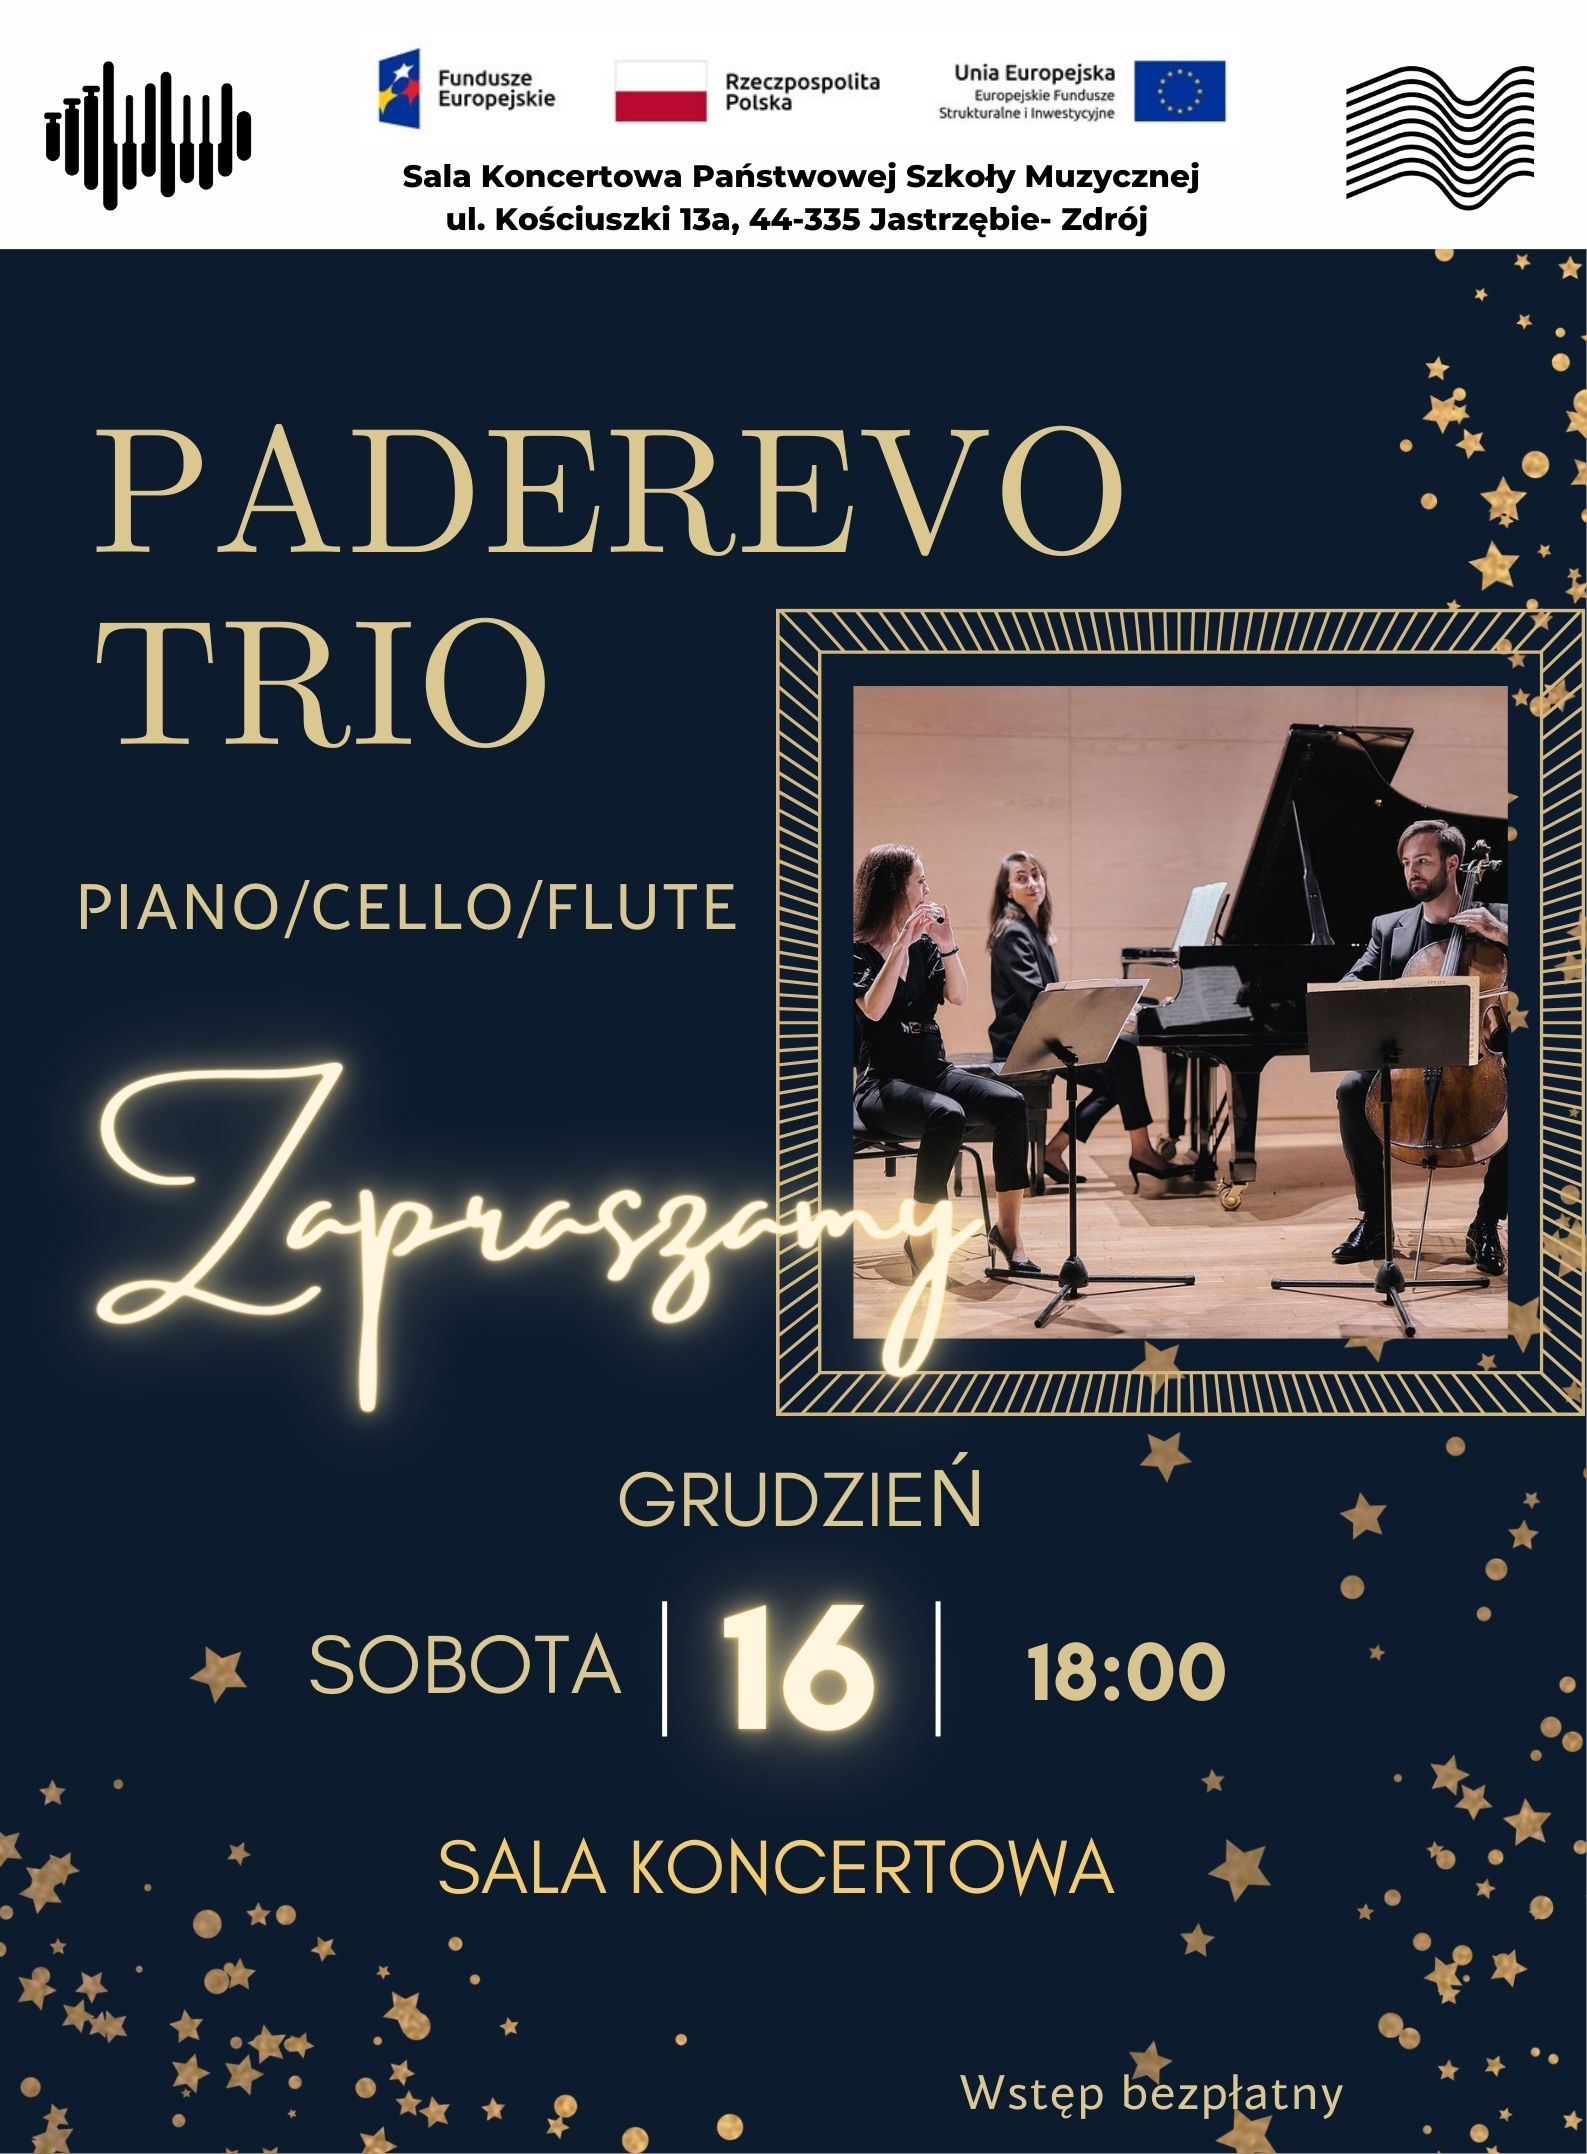 Plakat na Koncert Paderevo Trio.